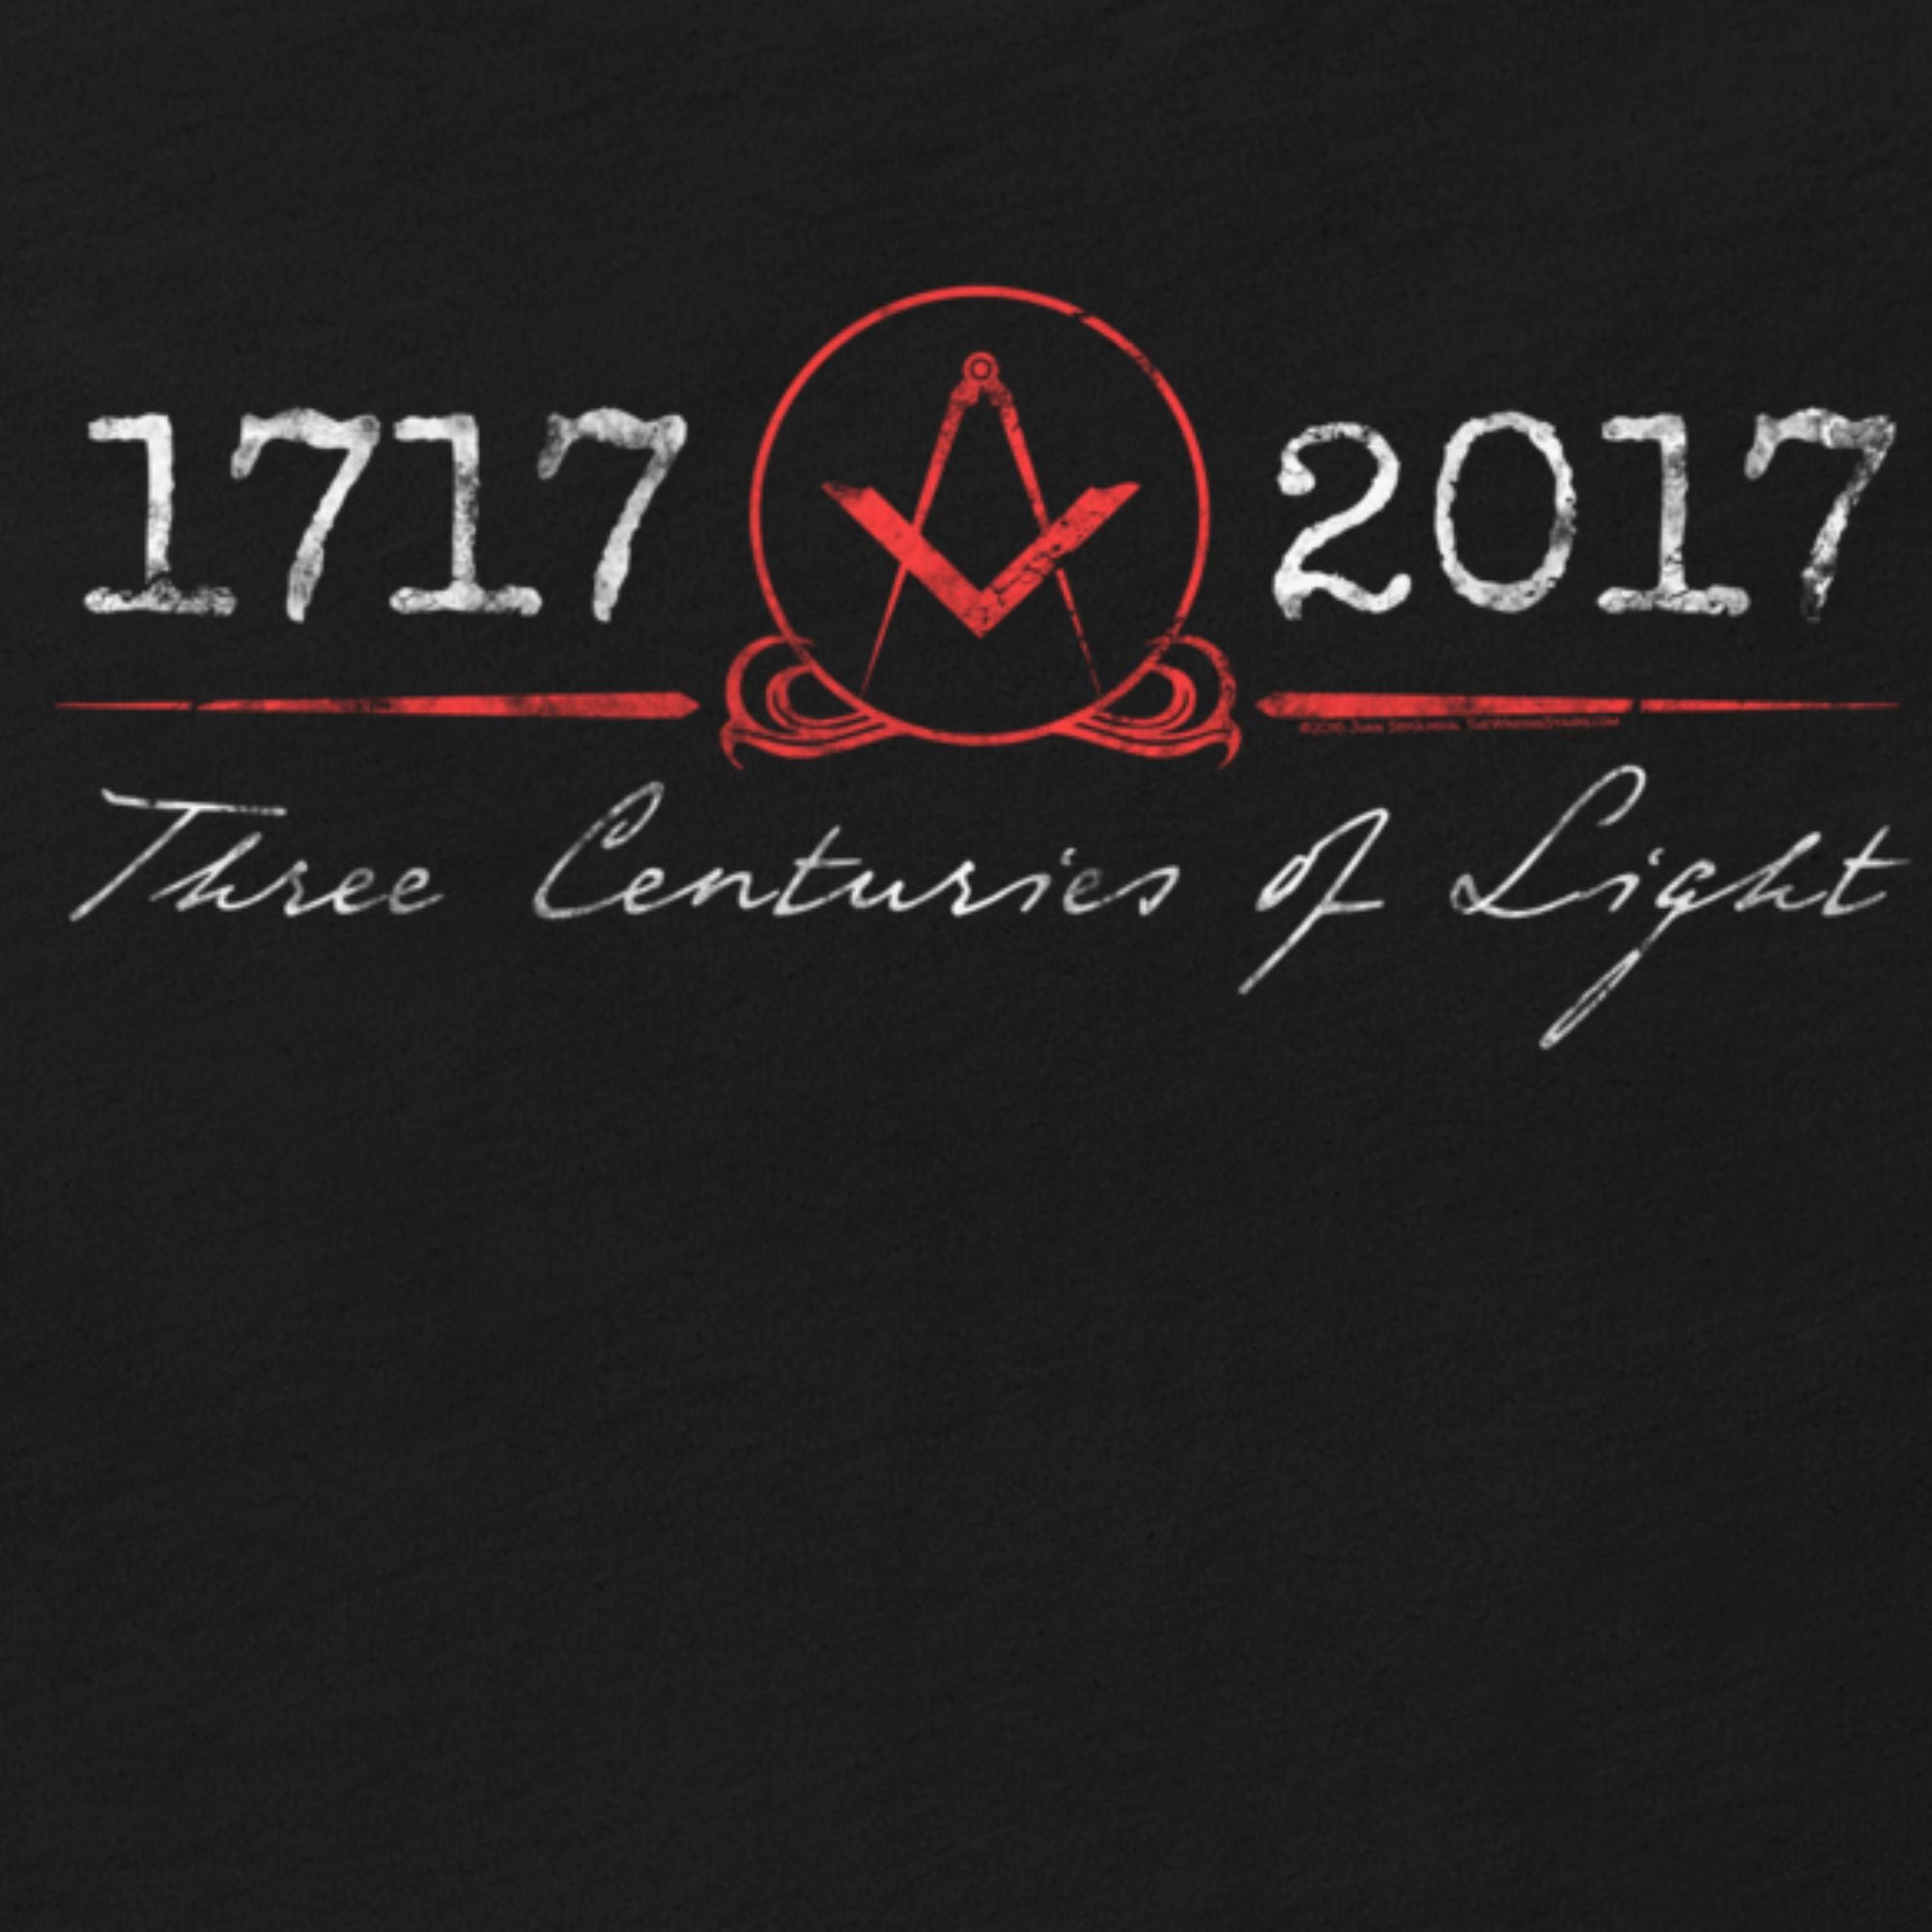 Three Centuries of Light | 1717-2017 Commemorative T-Shirt